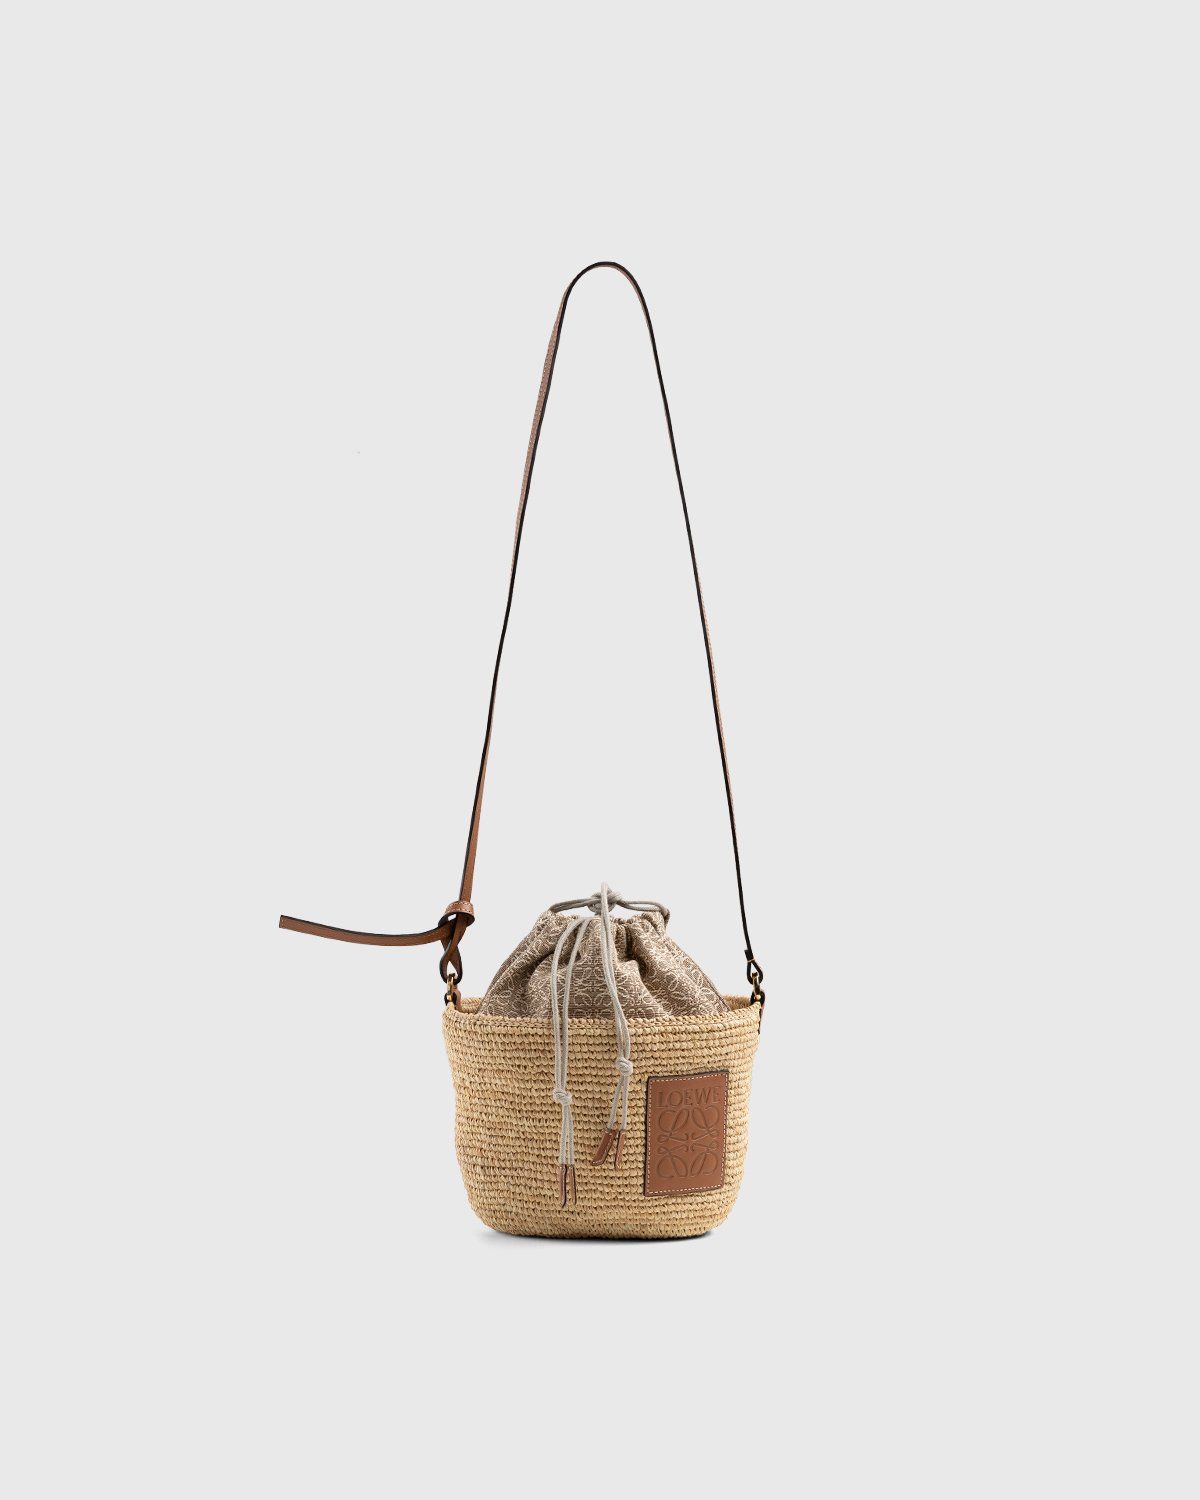 Loewe Raffia Pochette Bag - Neutrals Crossbody Bags, Handbags